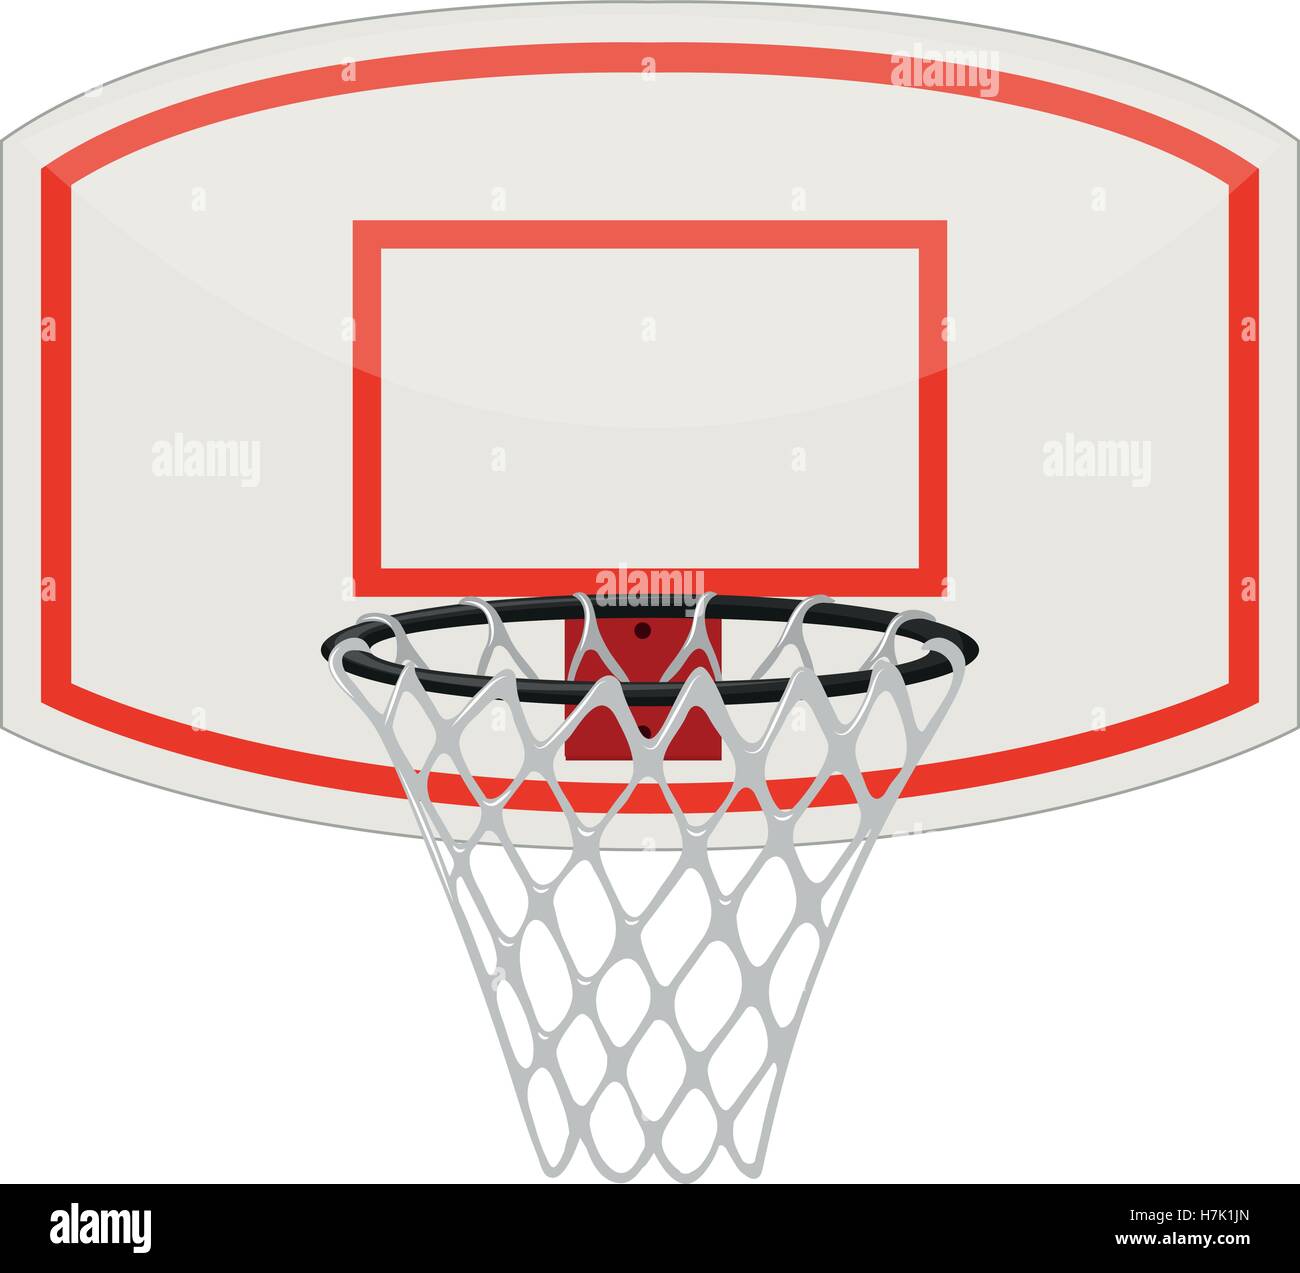 Basketball net and hoop illustration Stock Vector Image & Art - Alamy